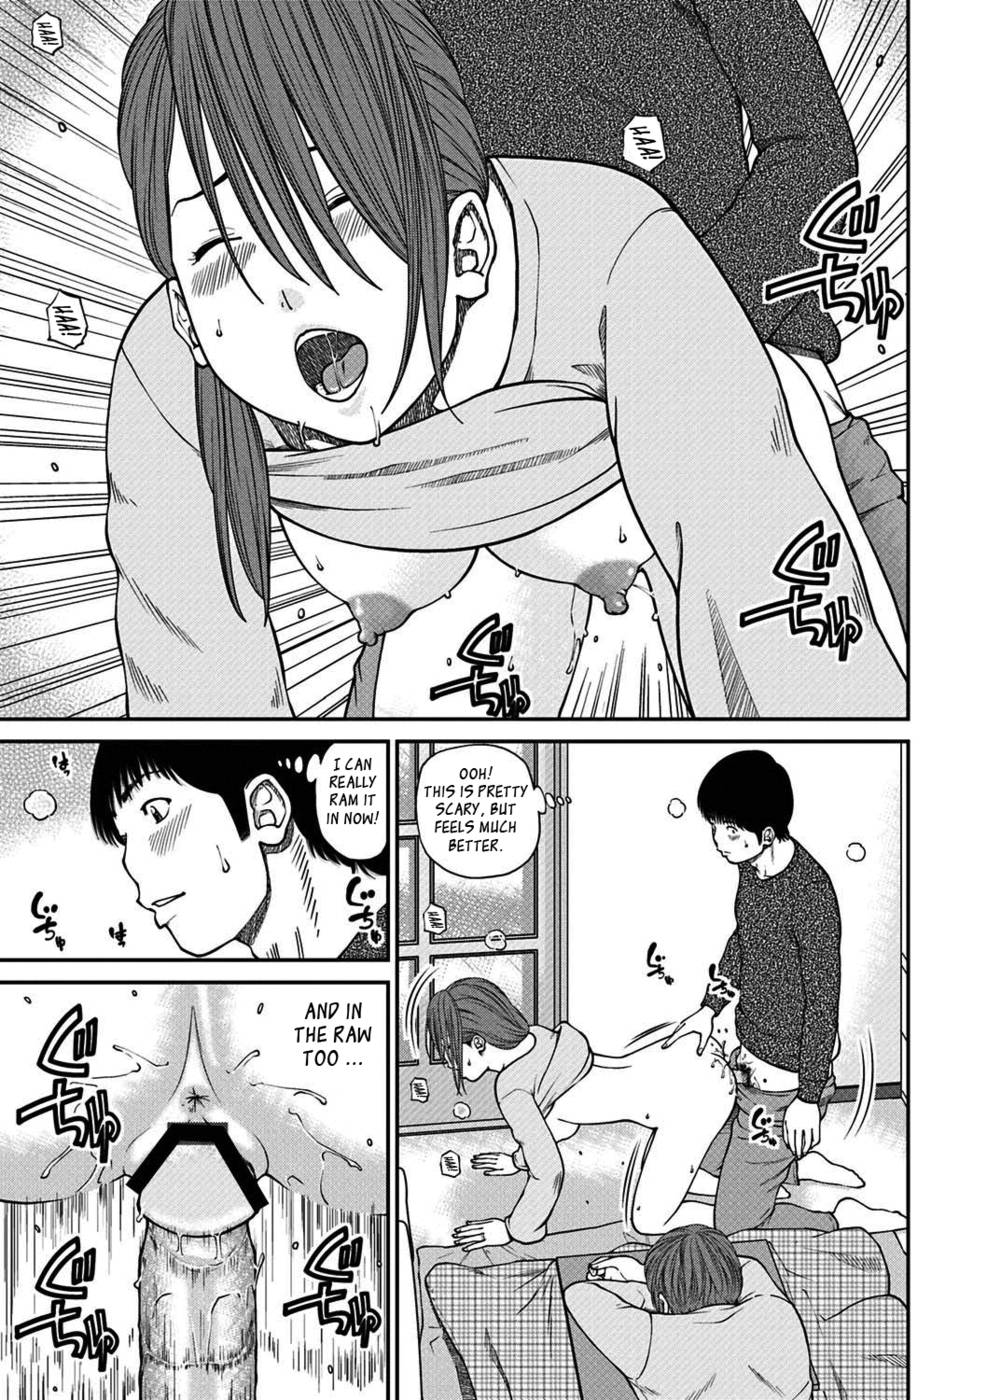 Sexxxxxxxxxxmom - 33 Year Old Unsatisfied Wife-Chapter 5-Under The Kotatsu-Hentai Manga  Hentai Comic - Page: 14 - Online porn video at mobile